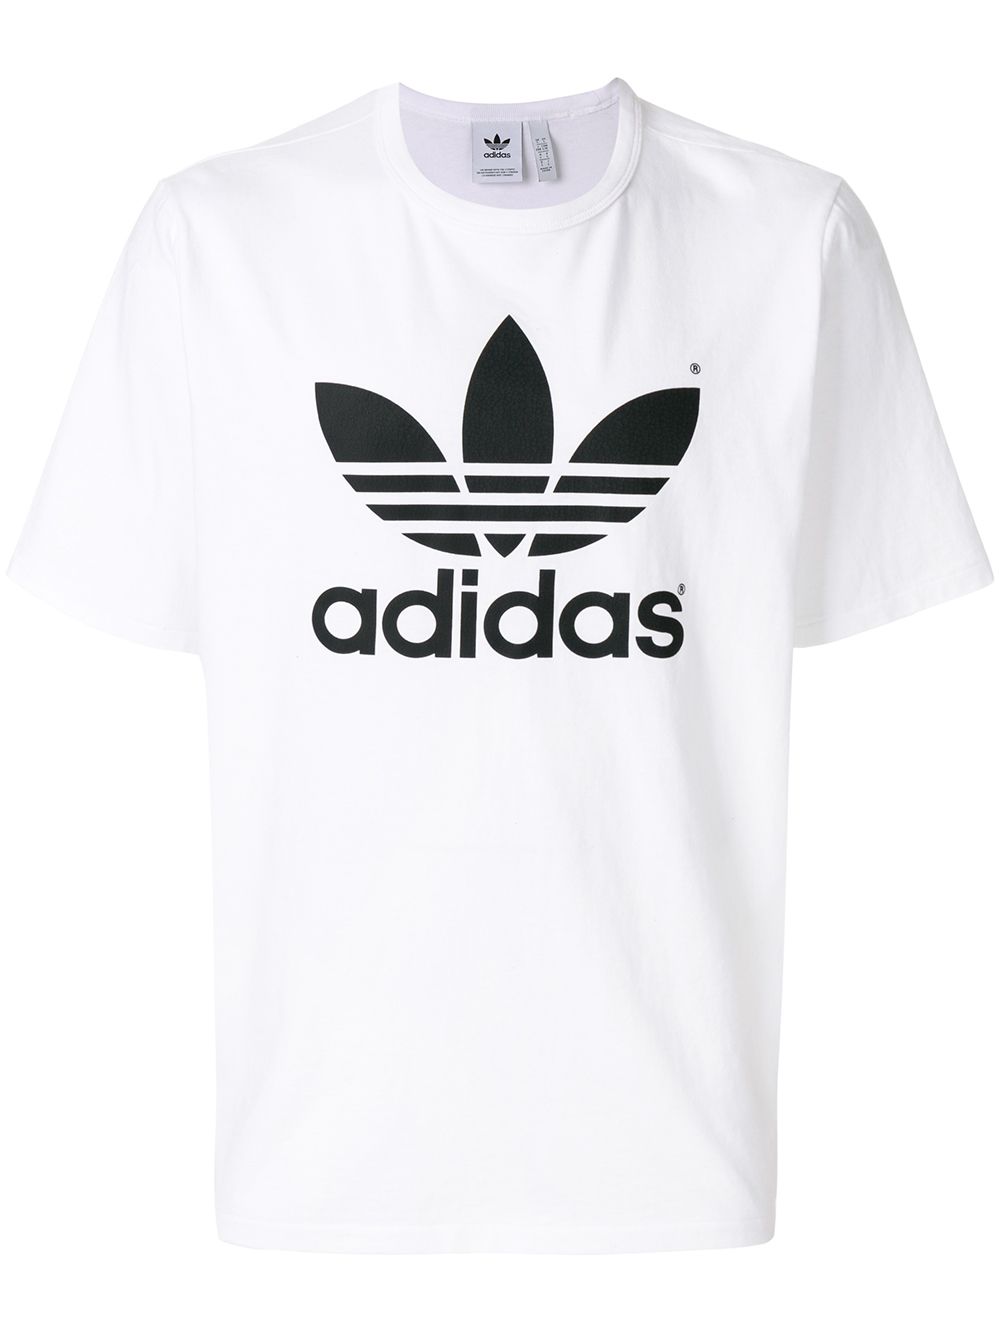 Adidas 1-1 Replica Trefoil T-shirt 